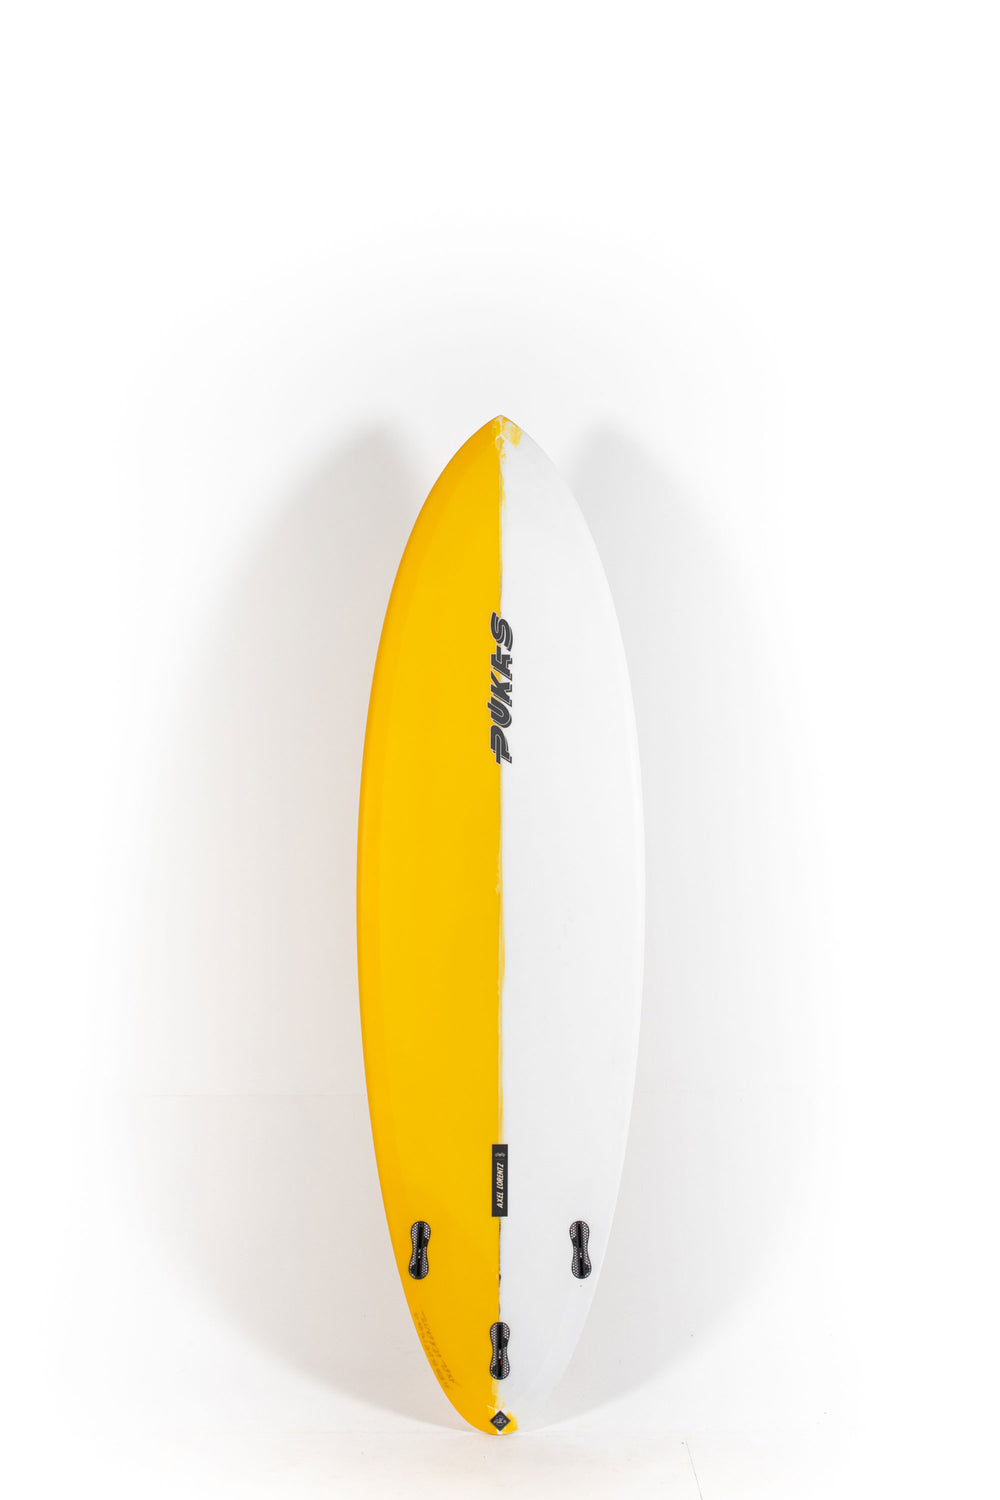 Pukas Surfboard - ORIGINAL 69 by Axel Lorentz - 6'6” x 21,75 x 2 